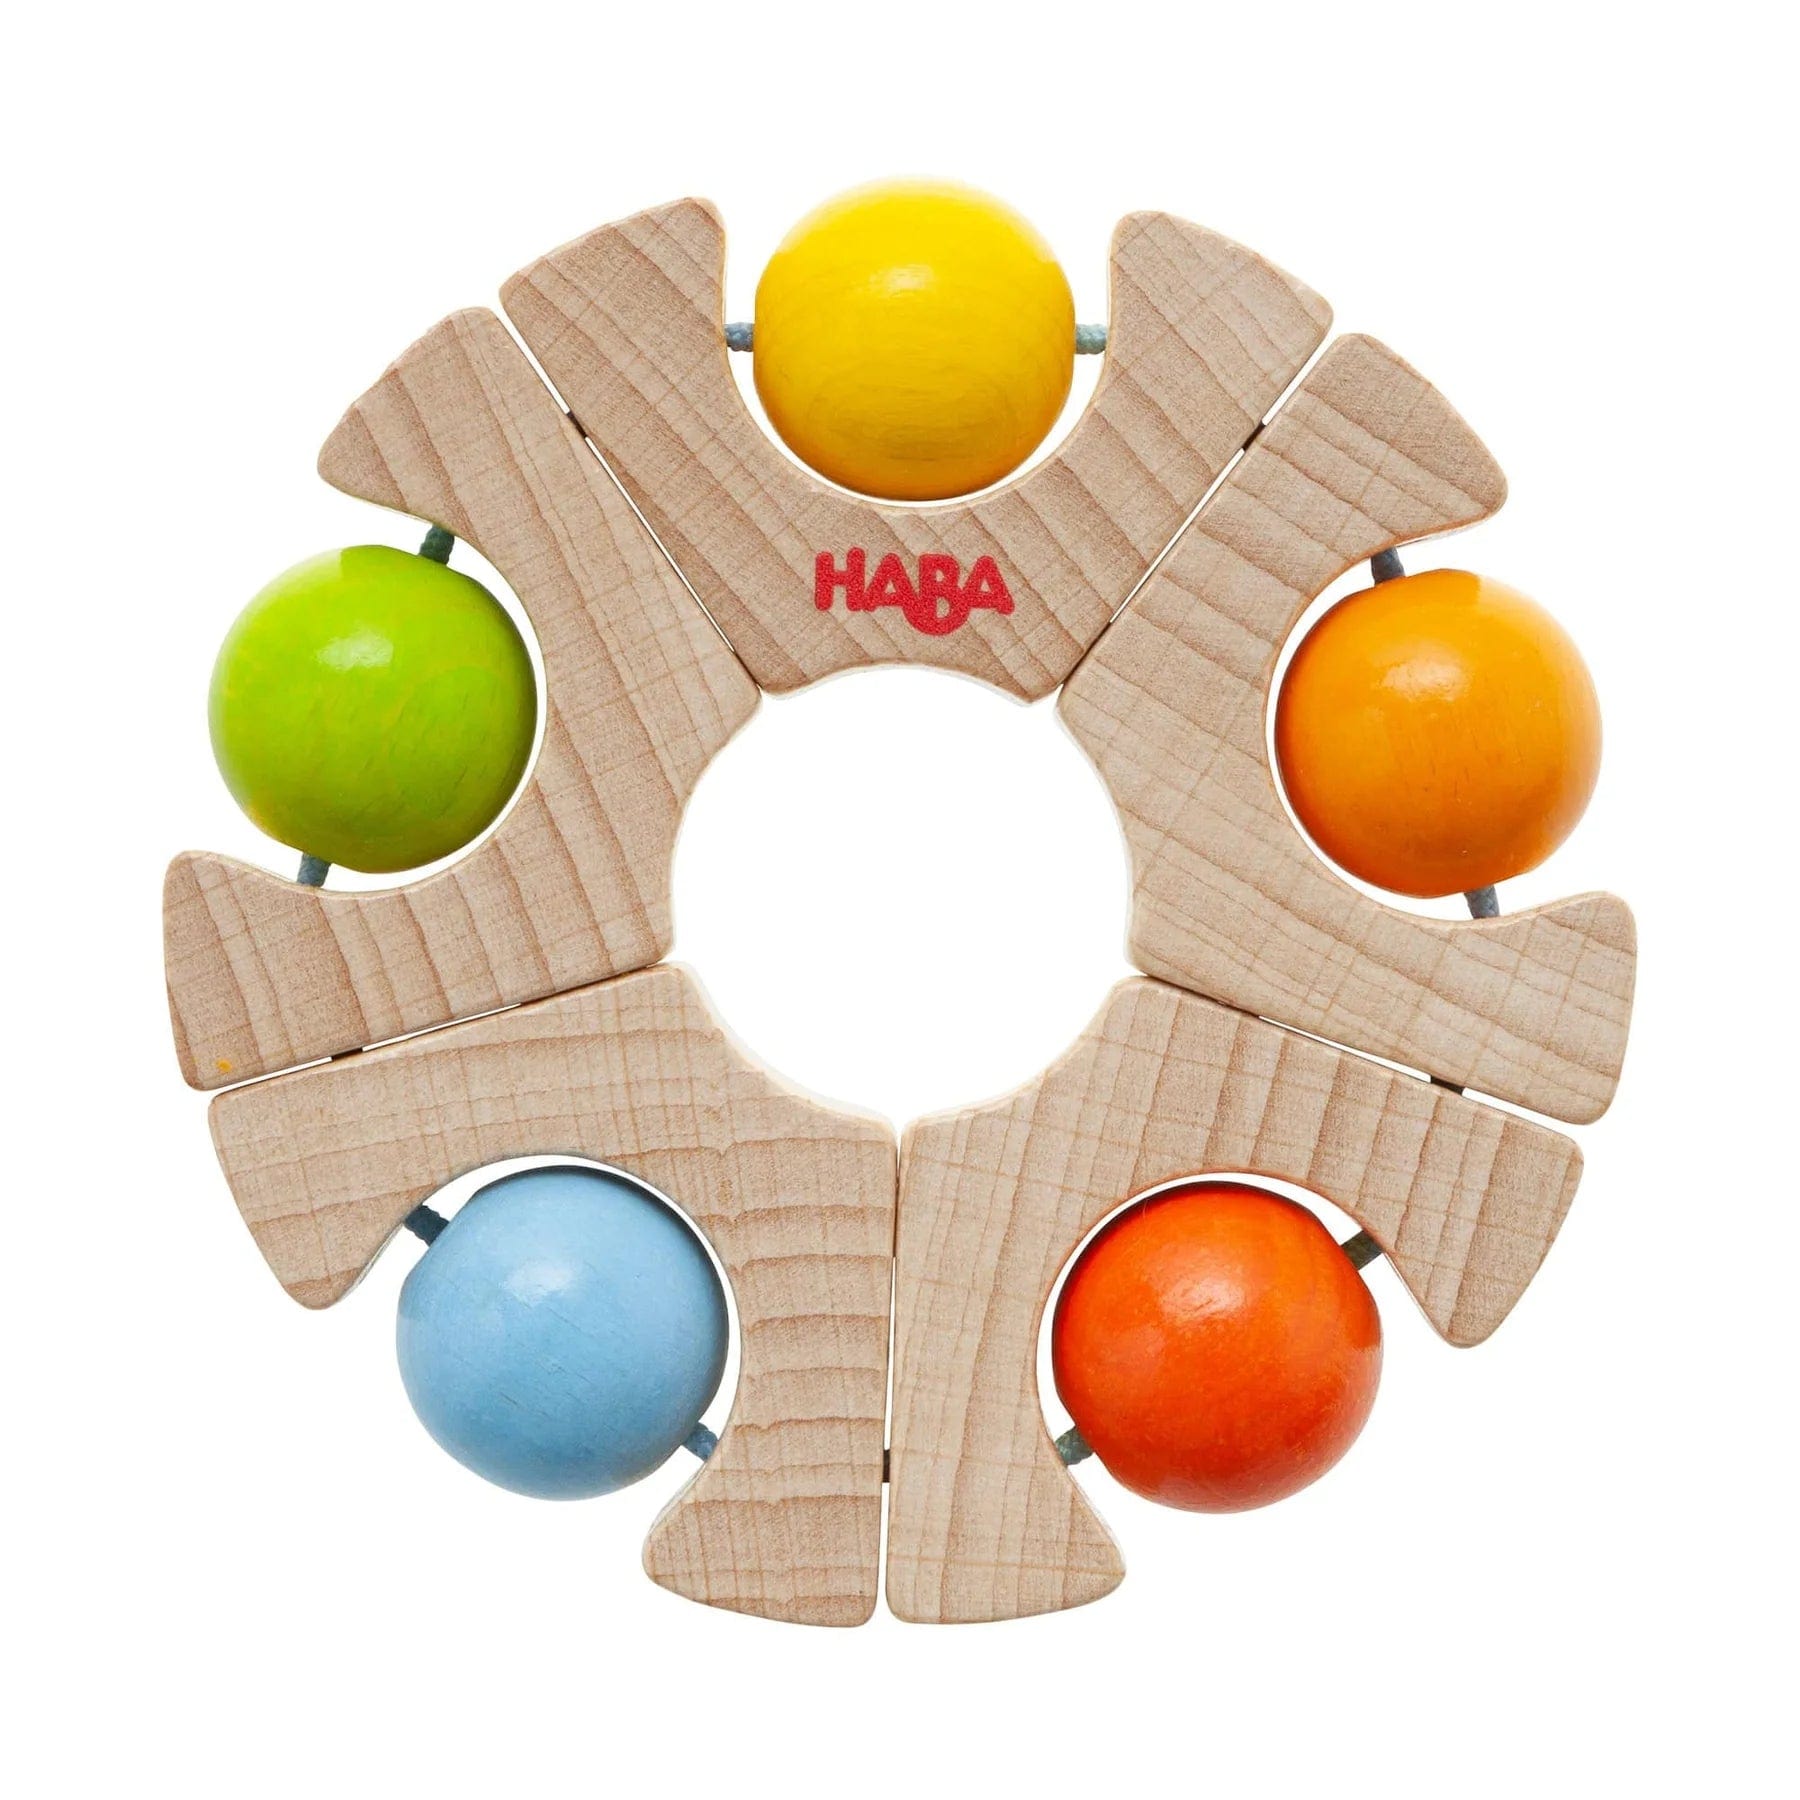 Haba Soother Ball Wheel Clutching Toy Haba Ball Wheel Clutching Toy